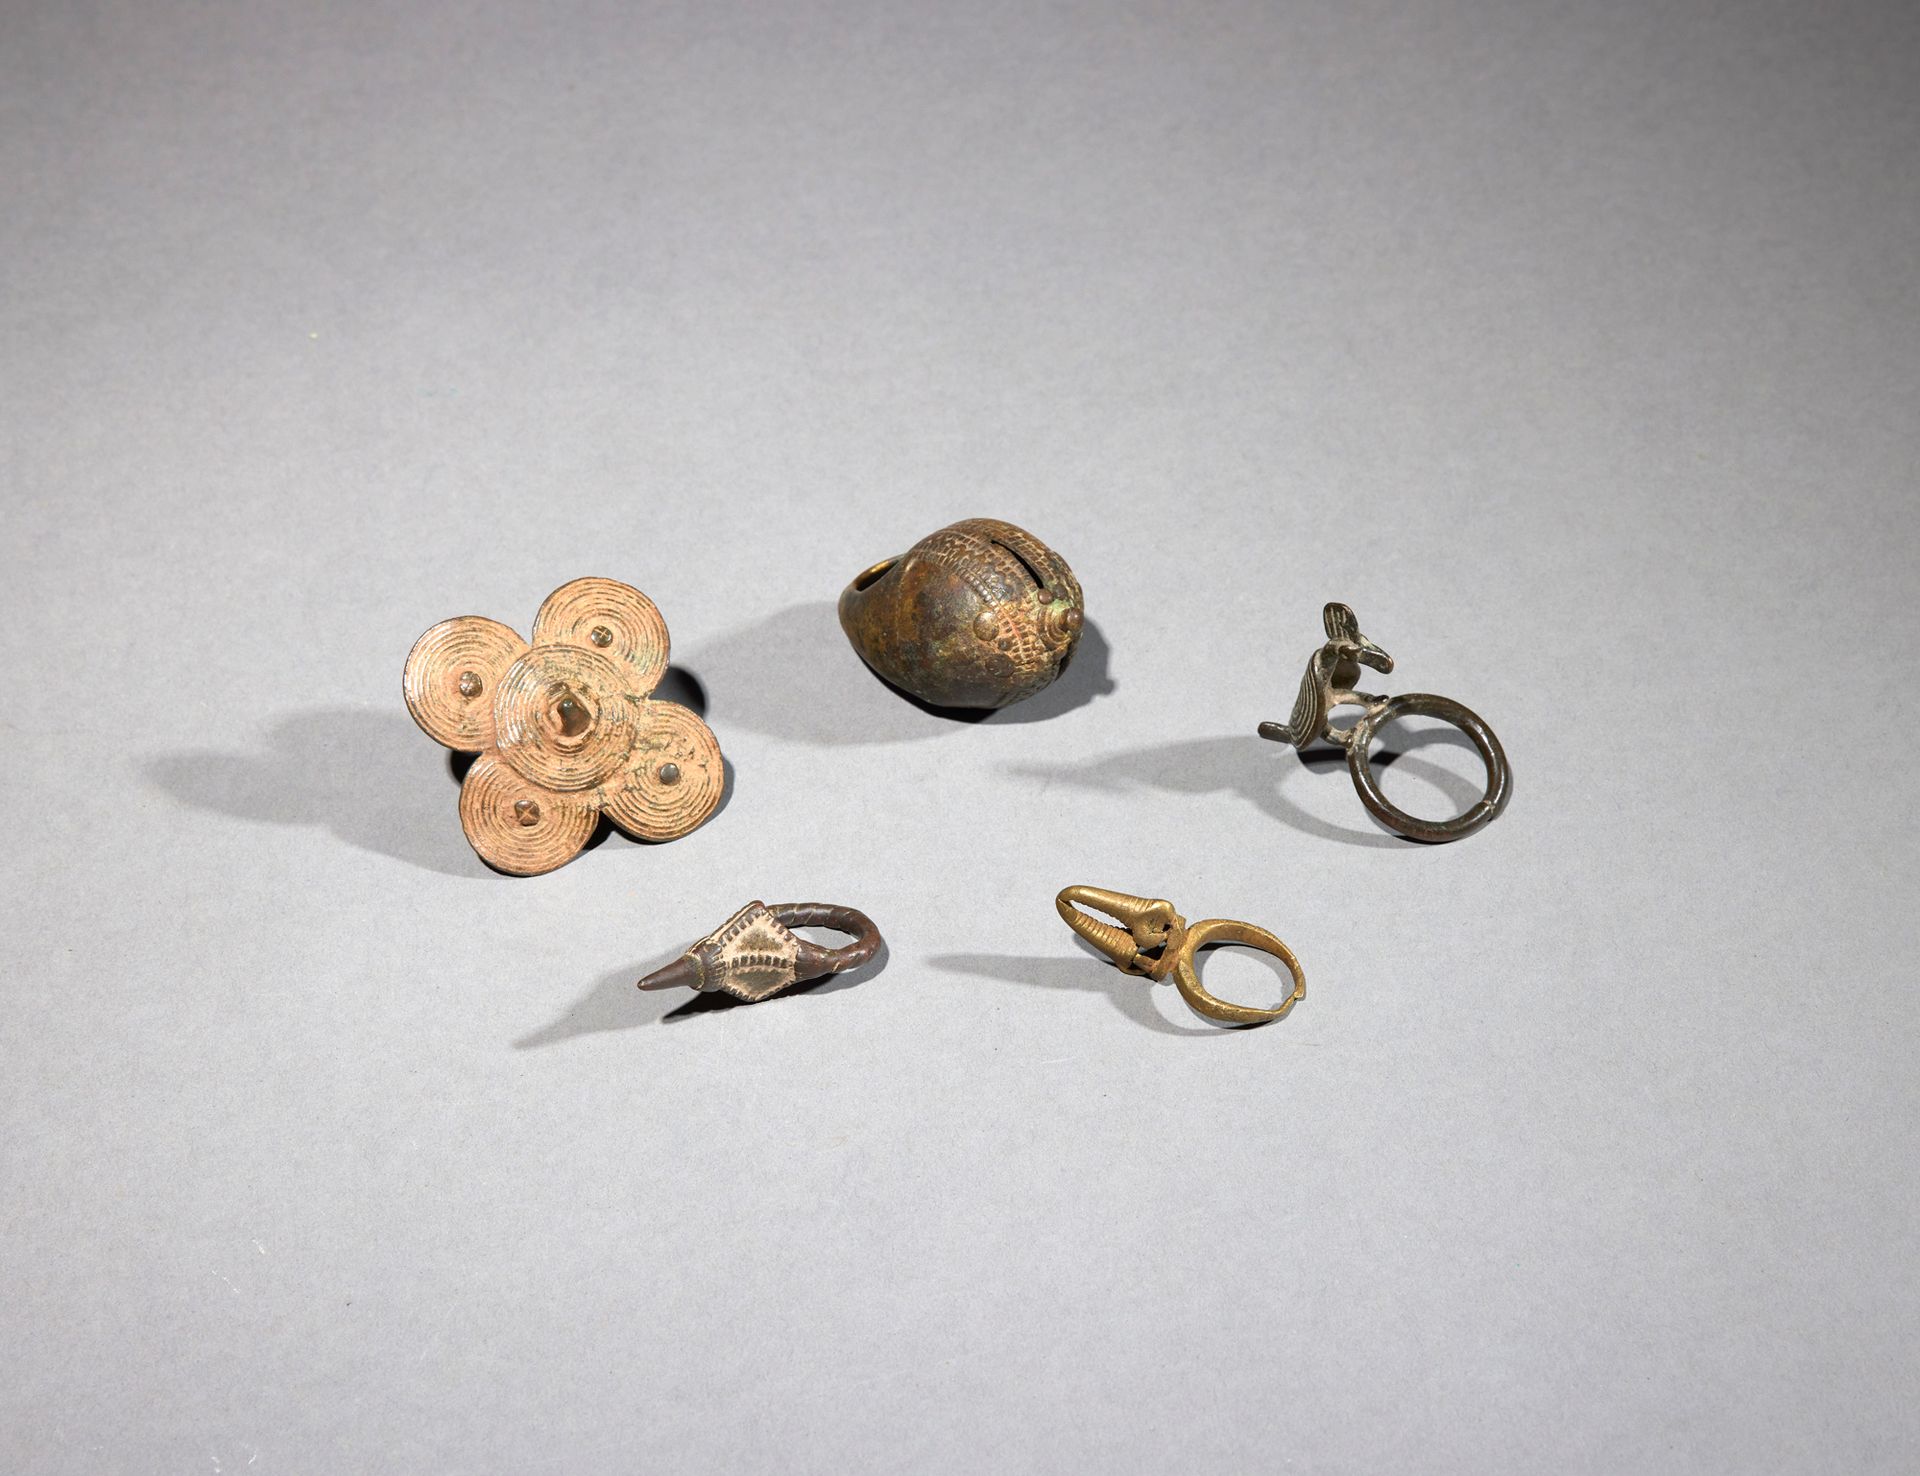 Null 五环

象牙海岸/布基那法索

铜质

H.4.4至6.3厘米



一套五个铜环，有些有几何装饰，一个有鸟，一个有螃蟹爪子。